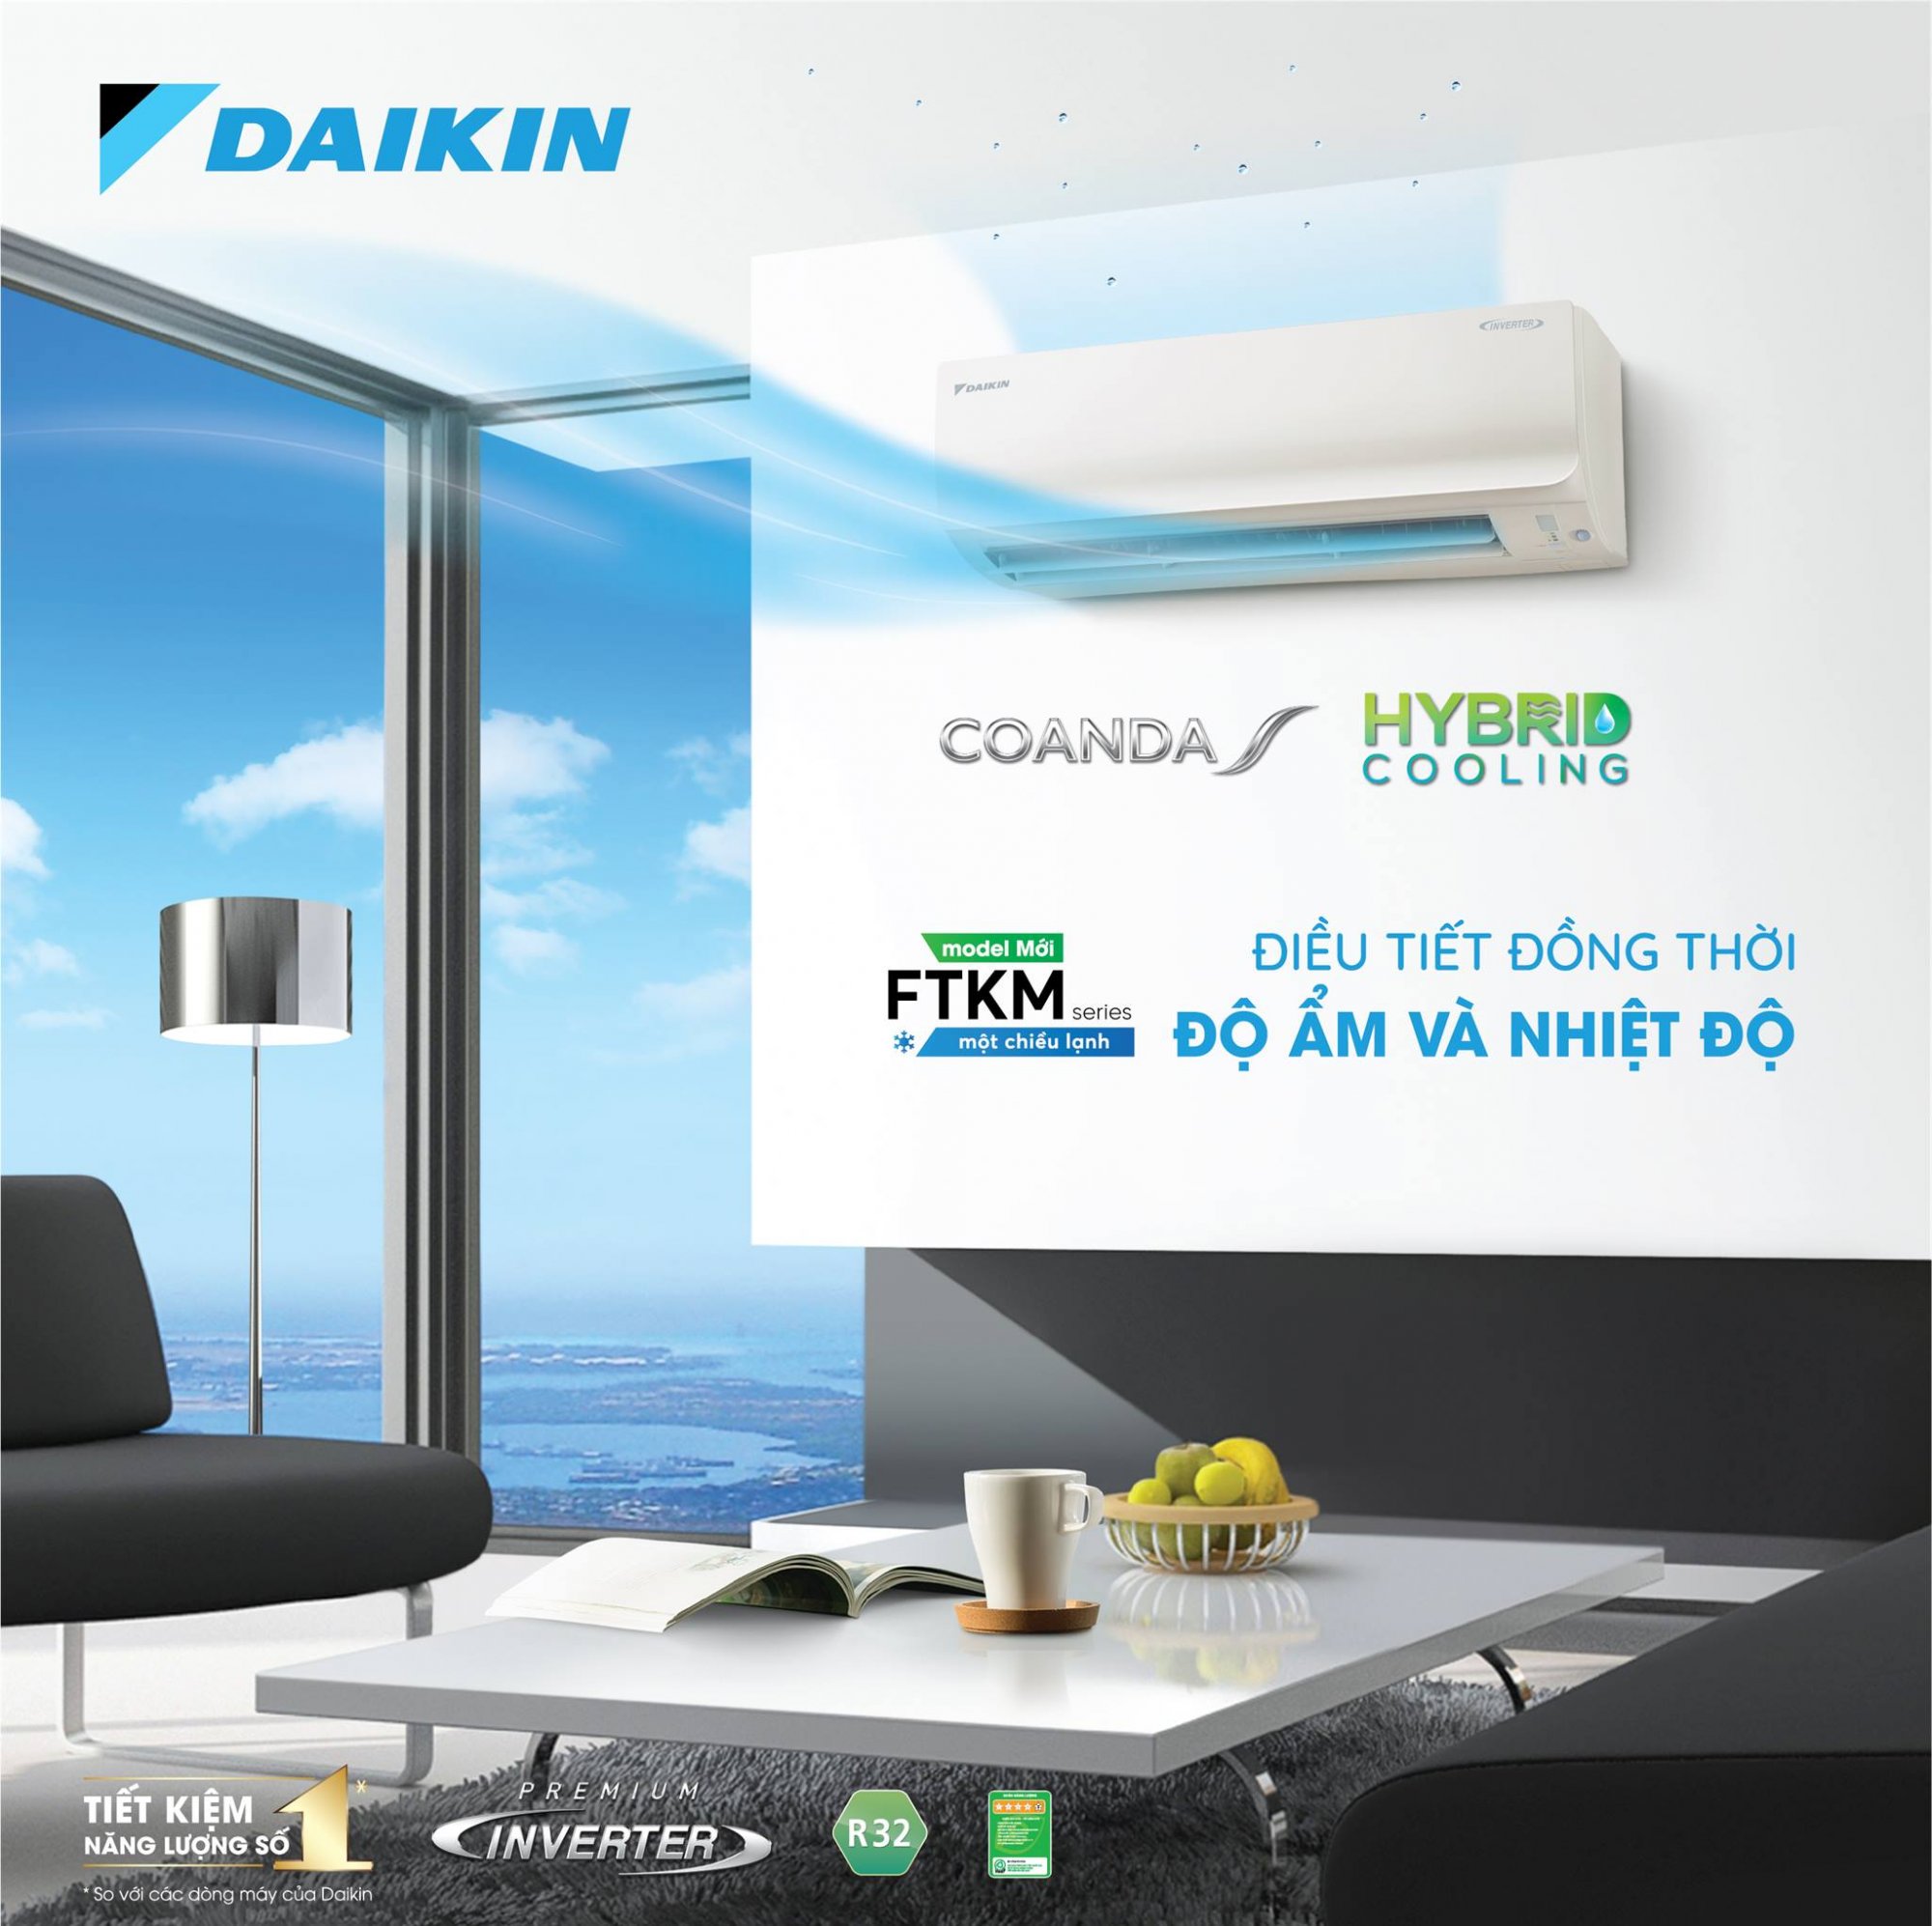 Máy lạnh Daikin series FTKC, Cao Cấp